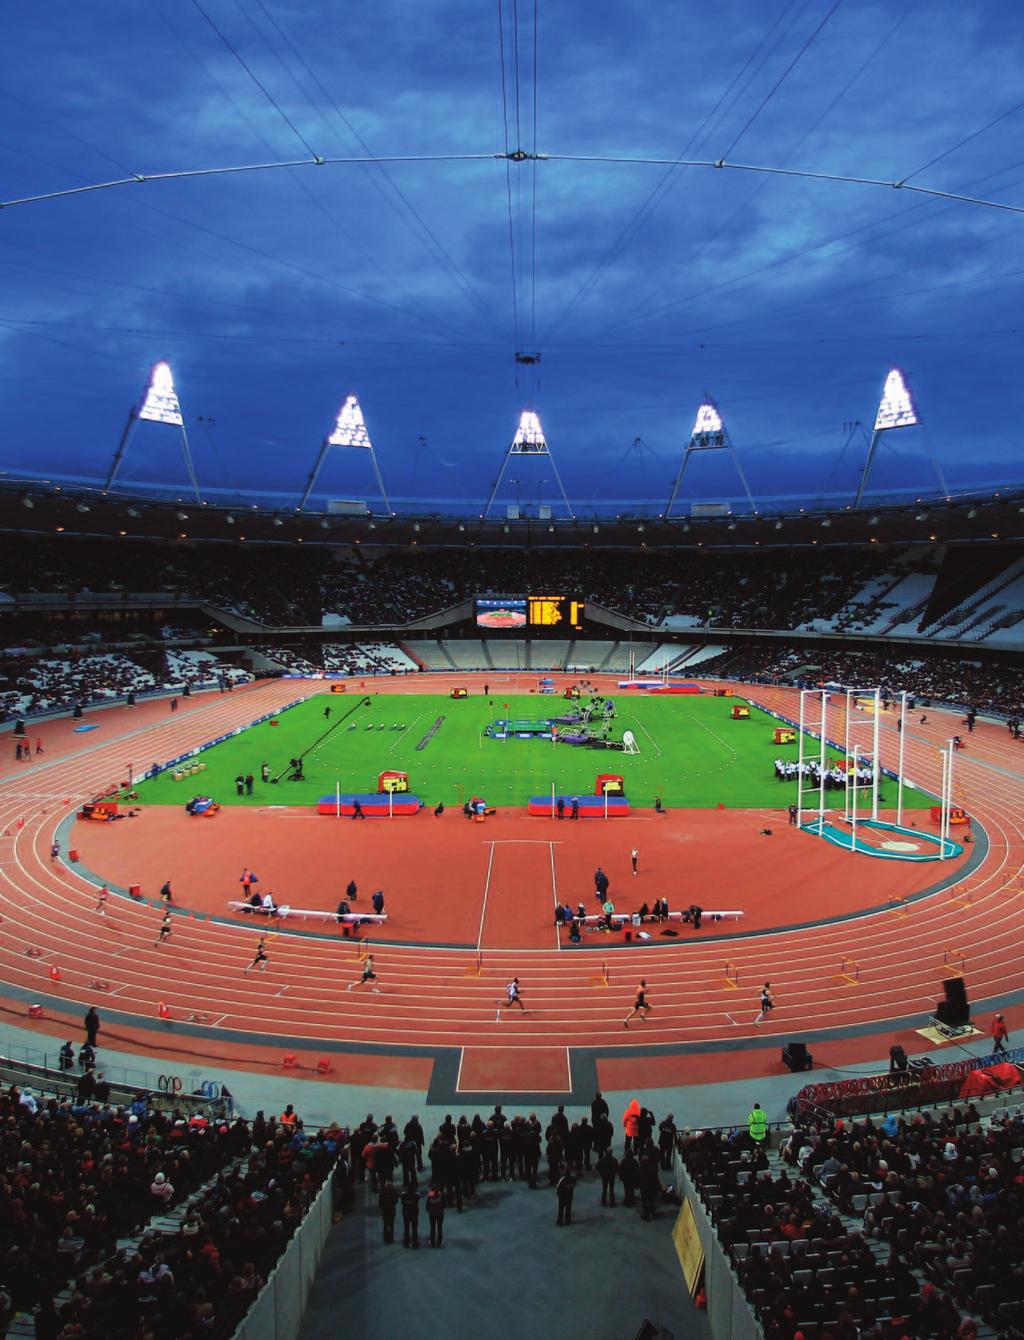 Athletics Statistics Book Games of the XXX Olympiad